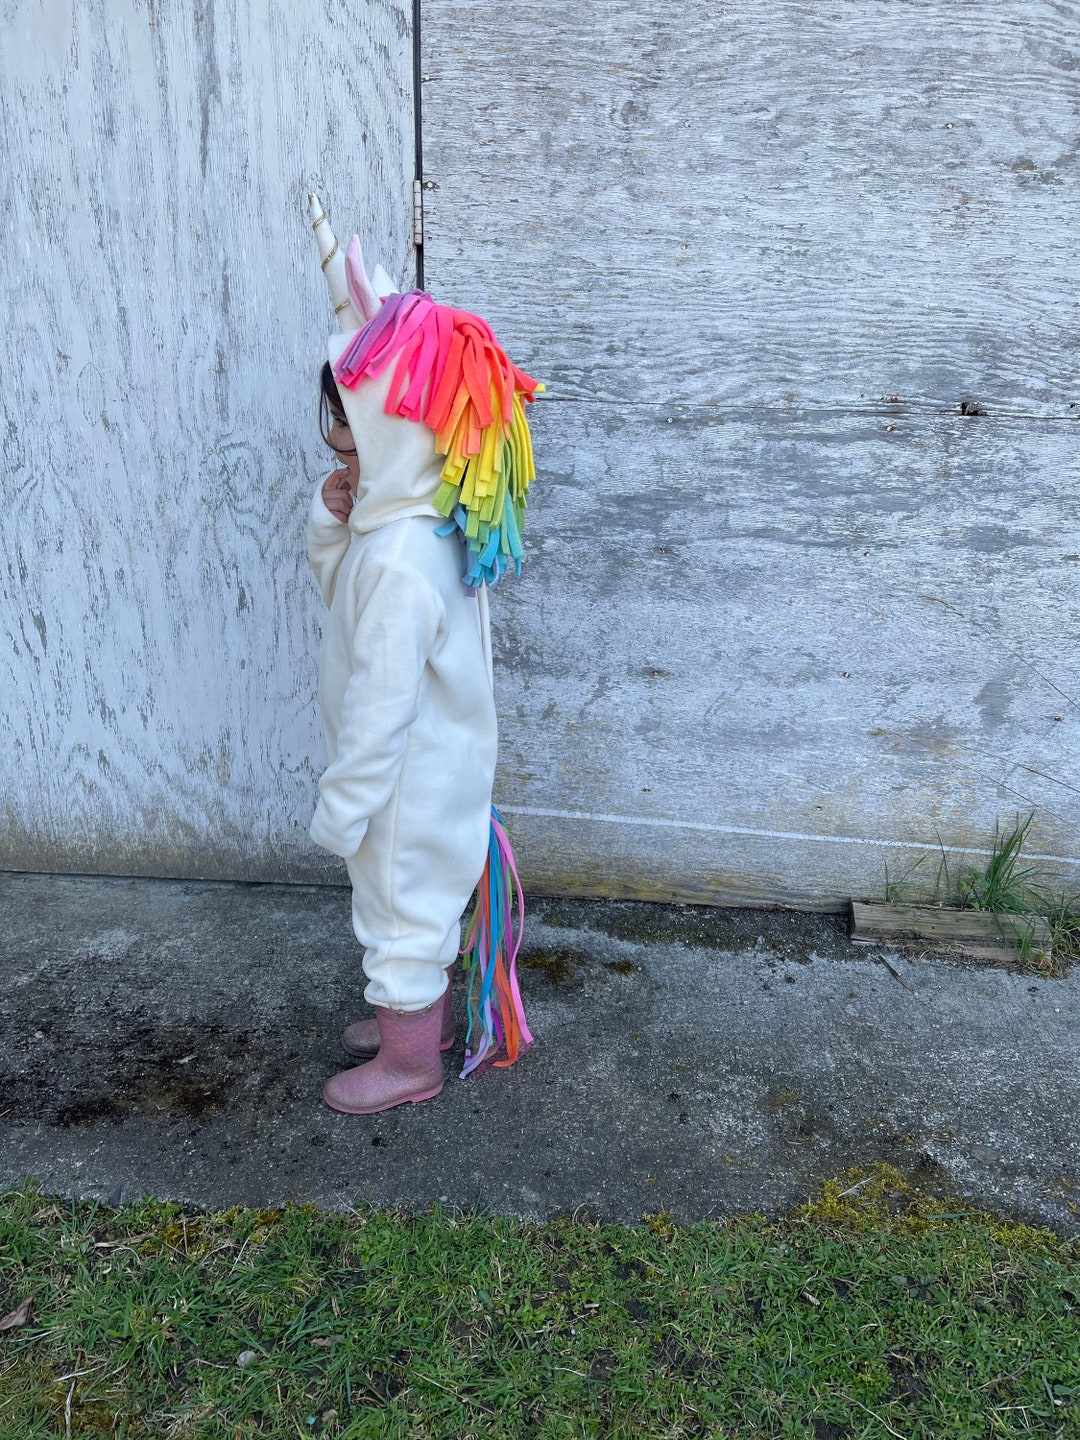 adult homemade unicorn costume